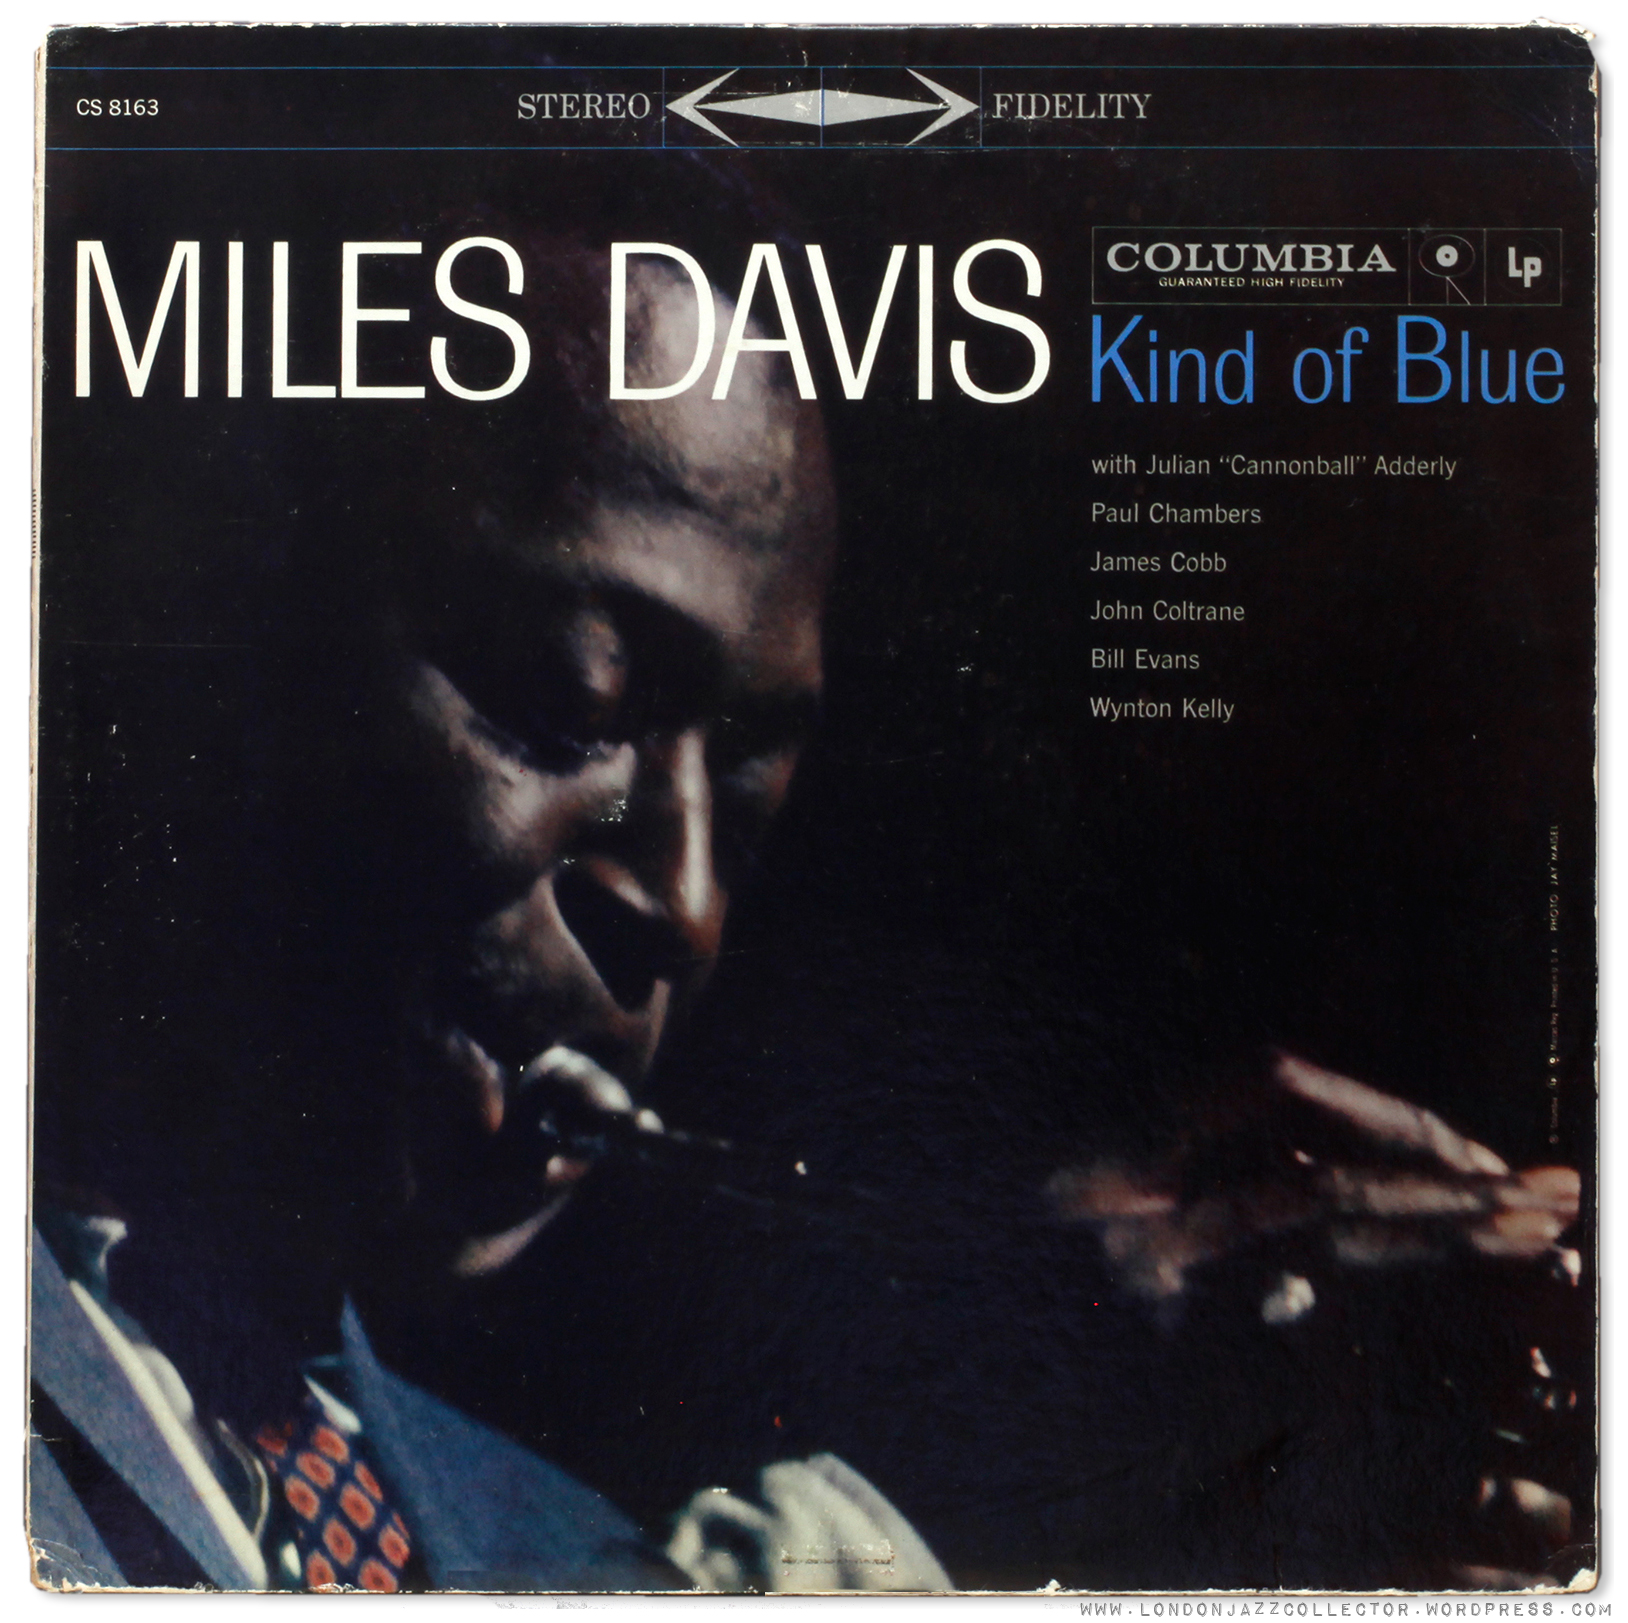 Different kind песня перевод. Kind of Blue Майлз Дэвис обложка. Miles Davis - kind of Blue (1959). Miles Davis kind of Blue обложка. Miles Davis kind of Blue Cover.